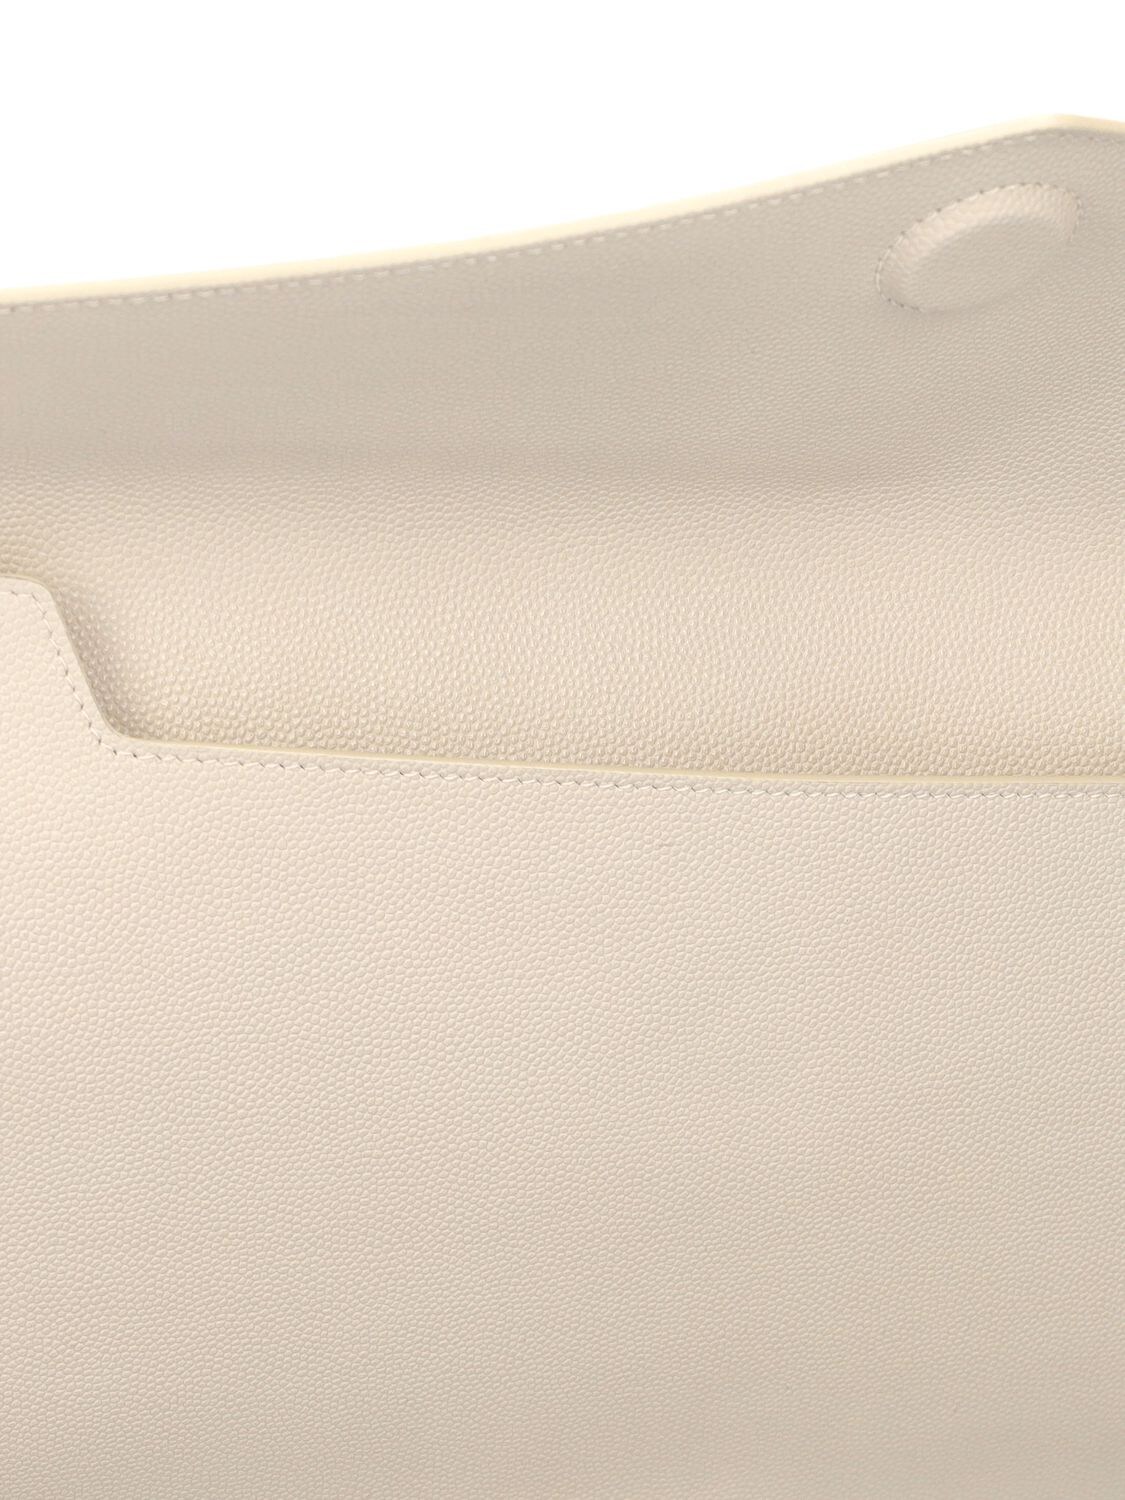 Saint Laurent Uptown Leather Crema Soft Envelope Clutch New